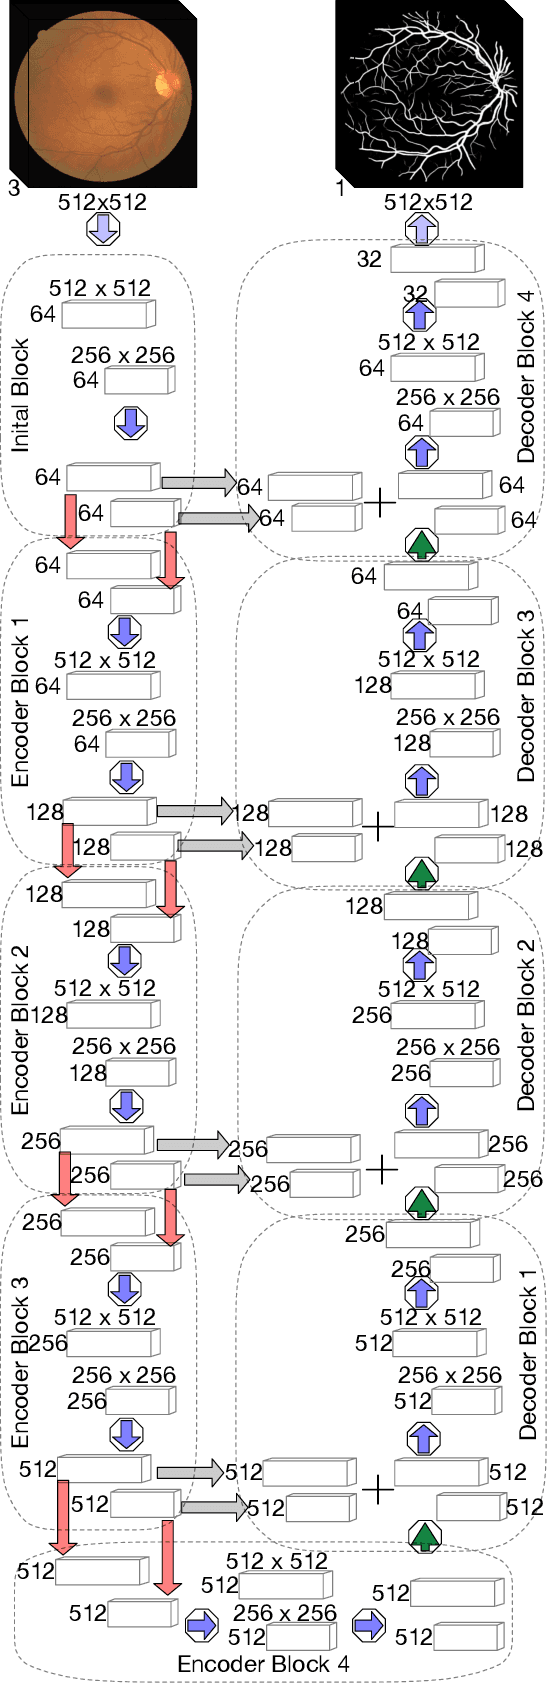 Figure 4 for Accurate Retinal Vessel Segmentation via Octave Convolution Neural Network